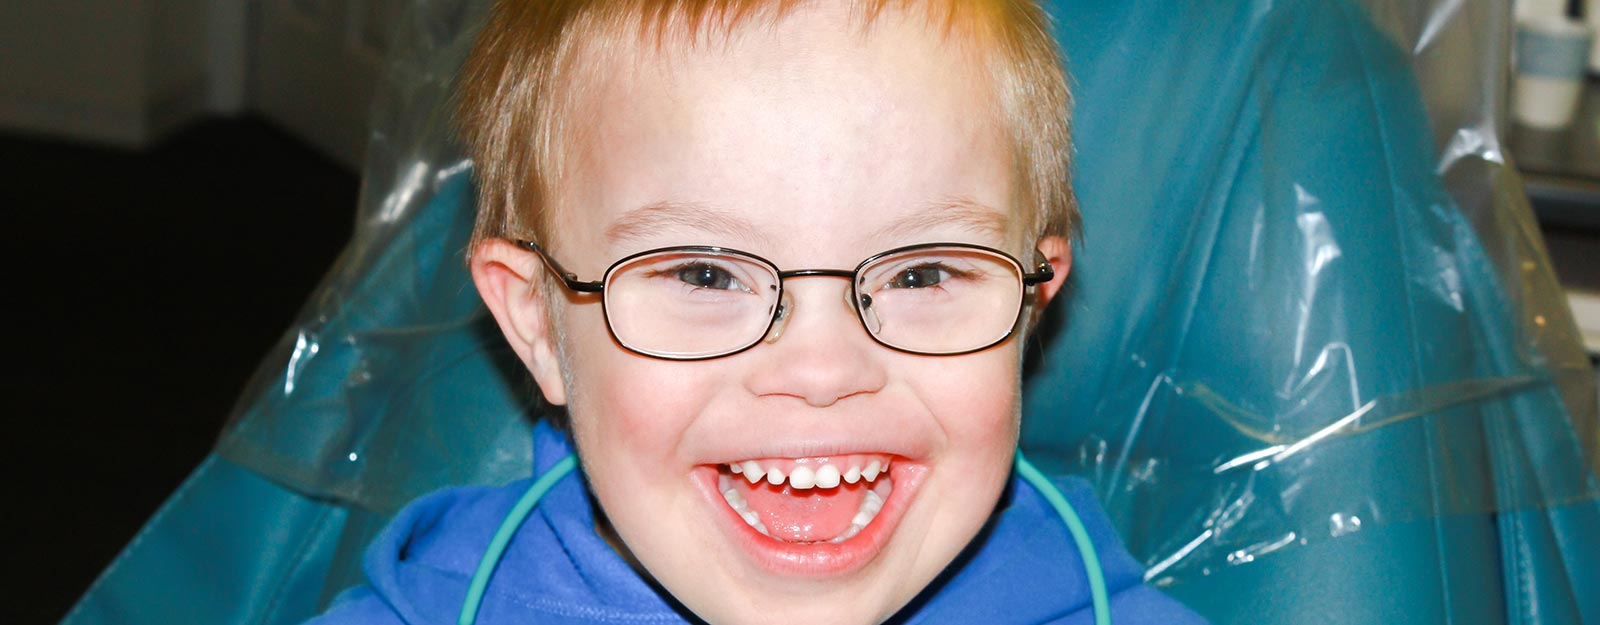 Boy smiling at dentist